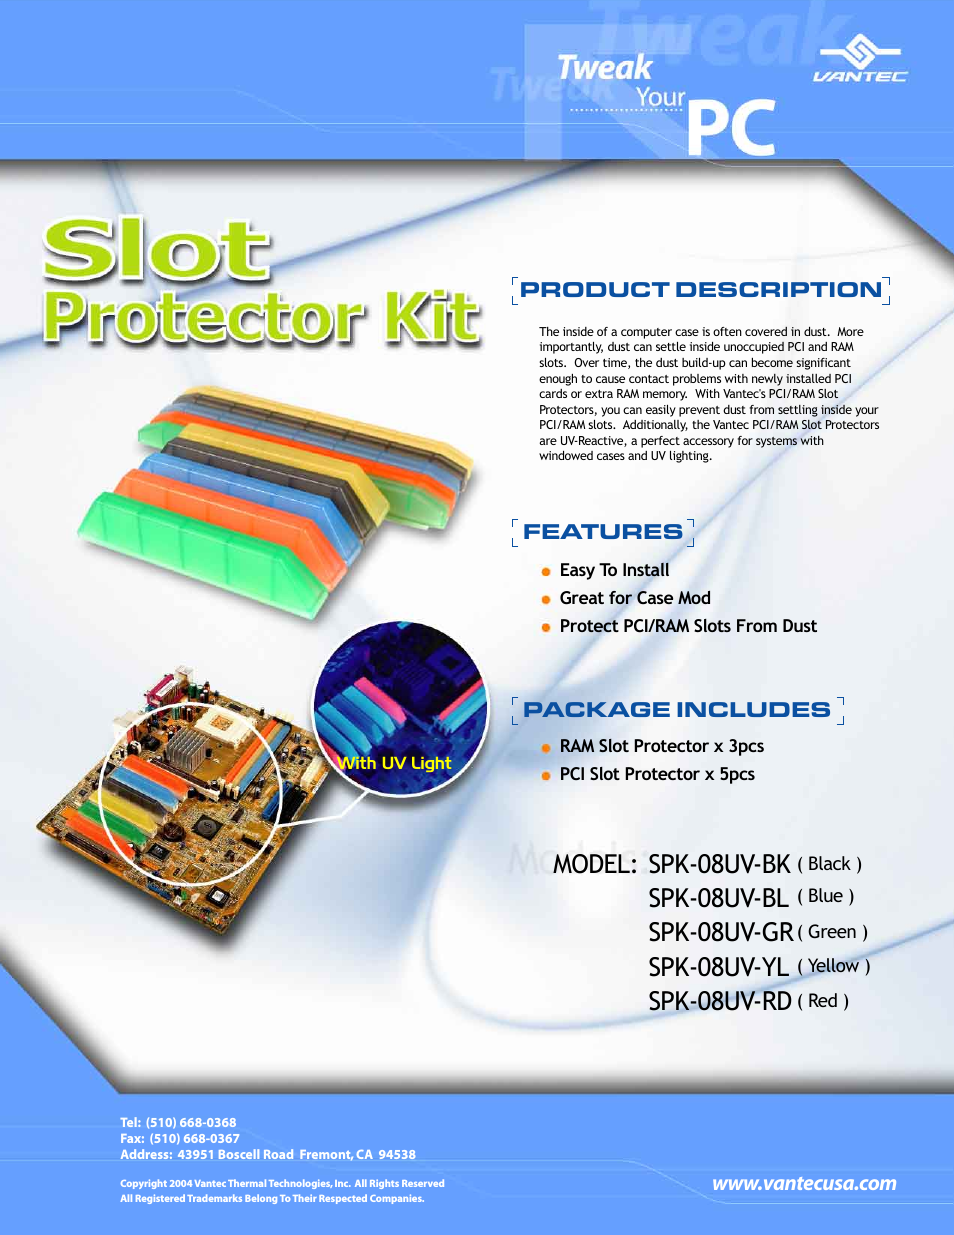 Slot Protector Kit SPK-08UV-RD